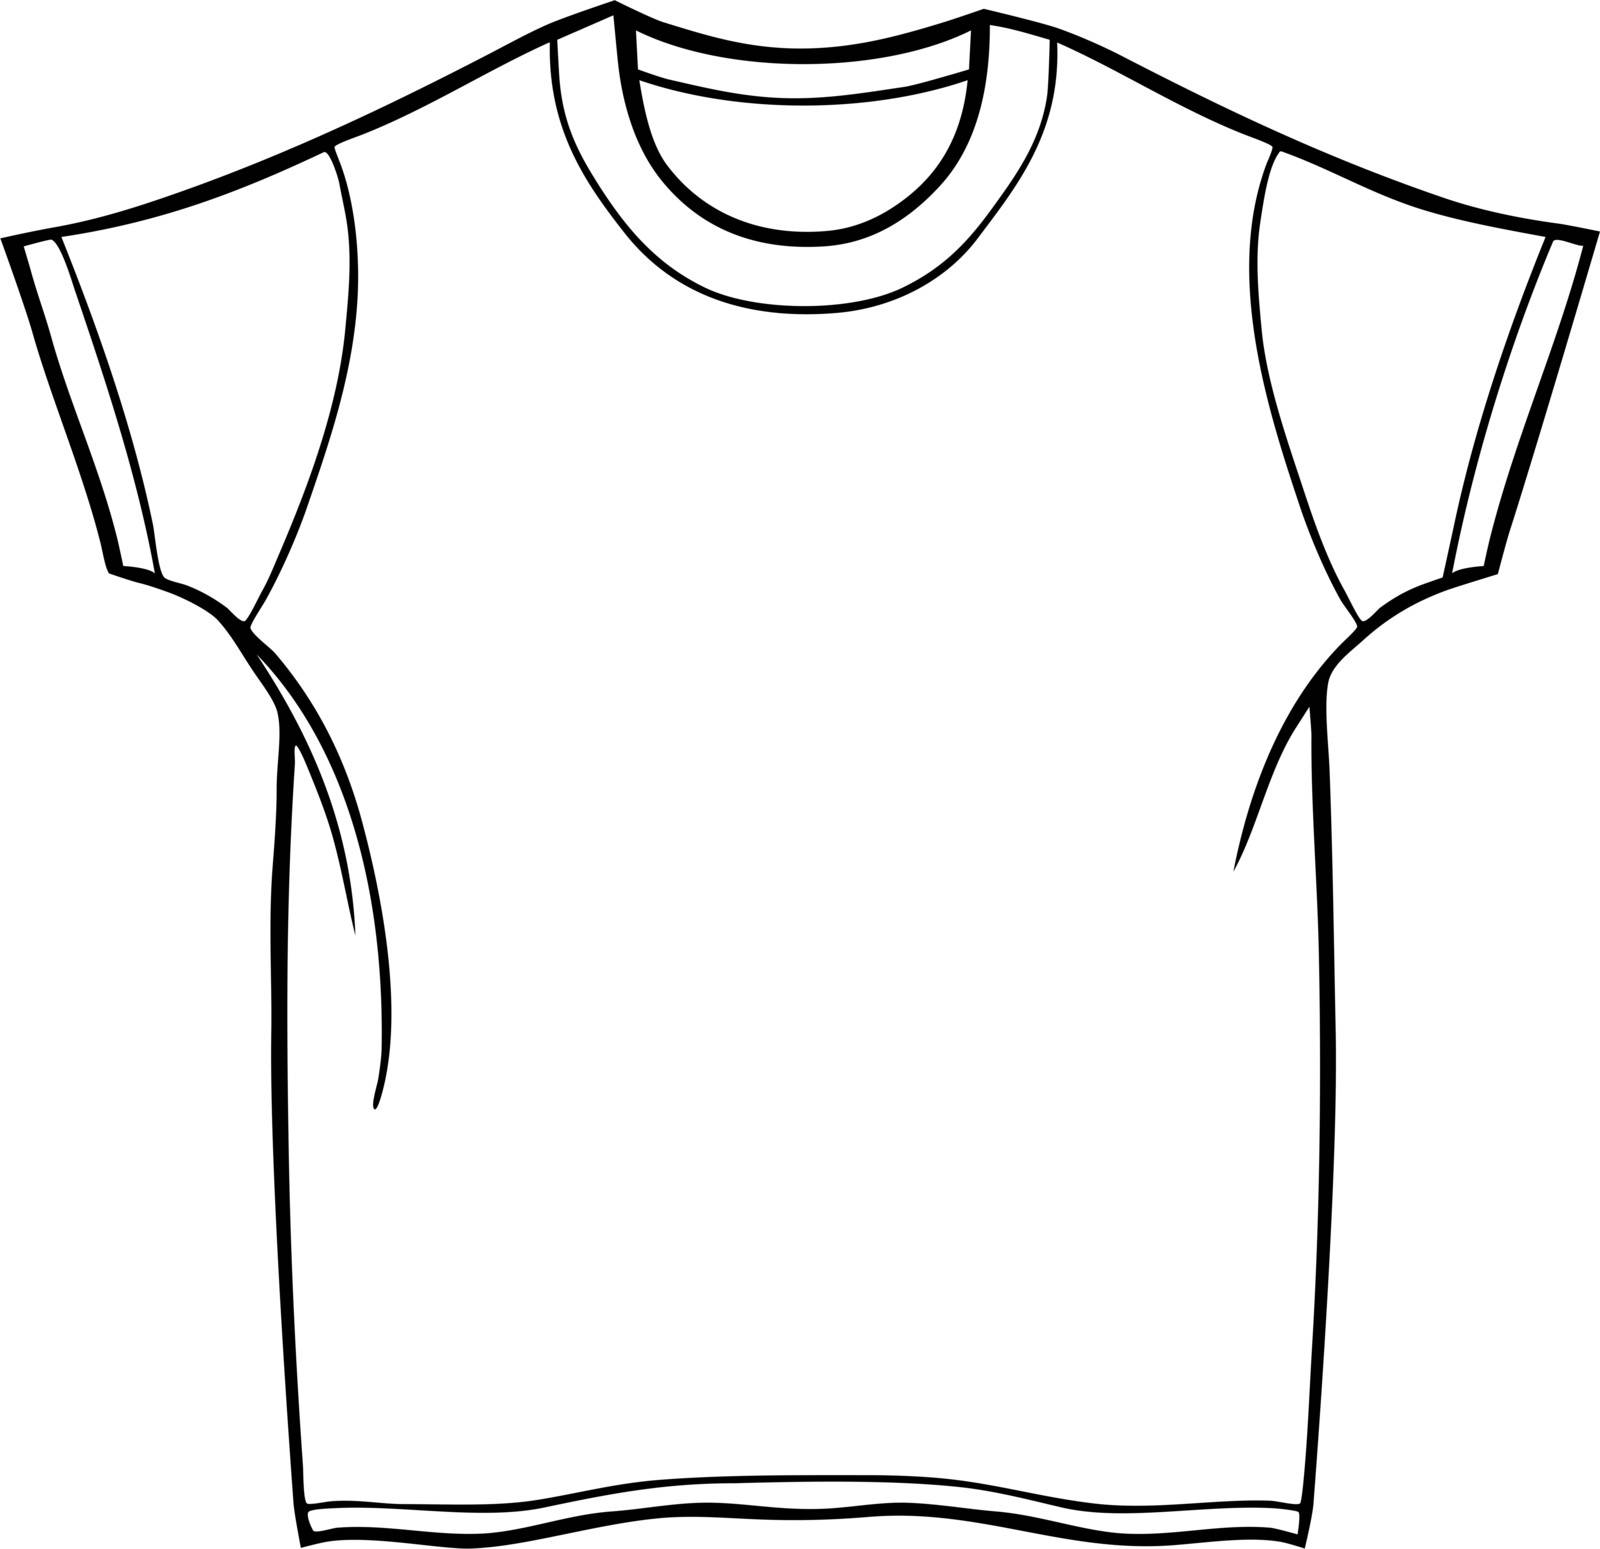 Clothing line art - t-shirt - black and white.